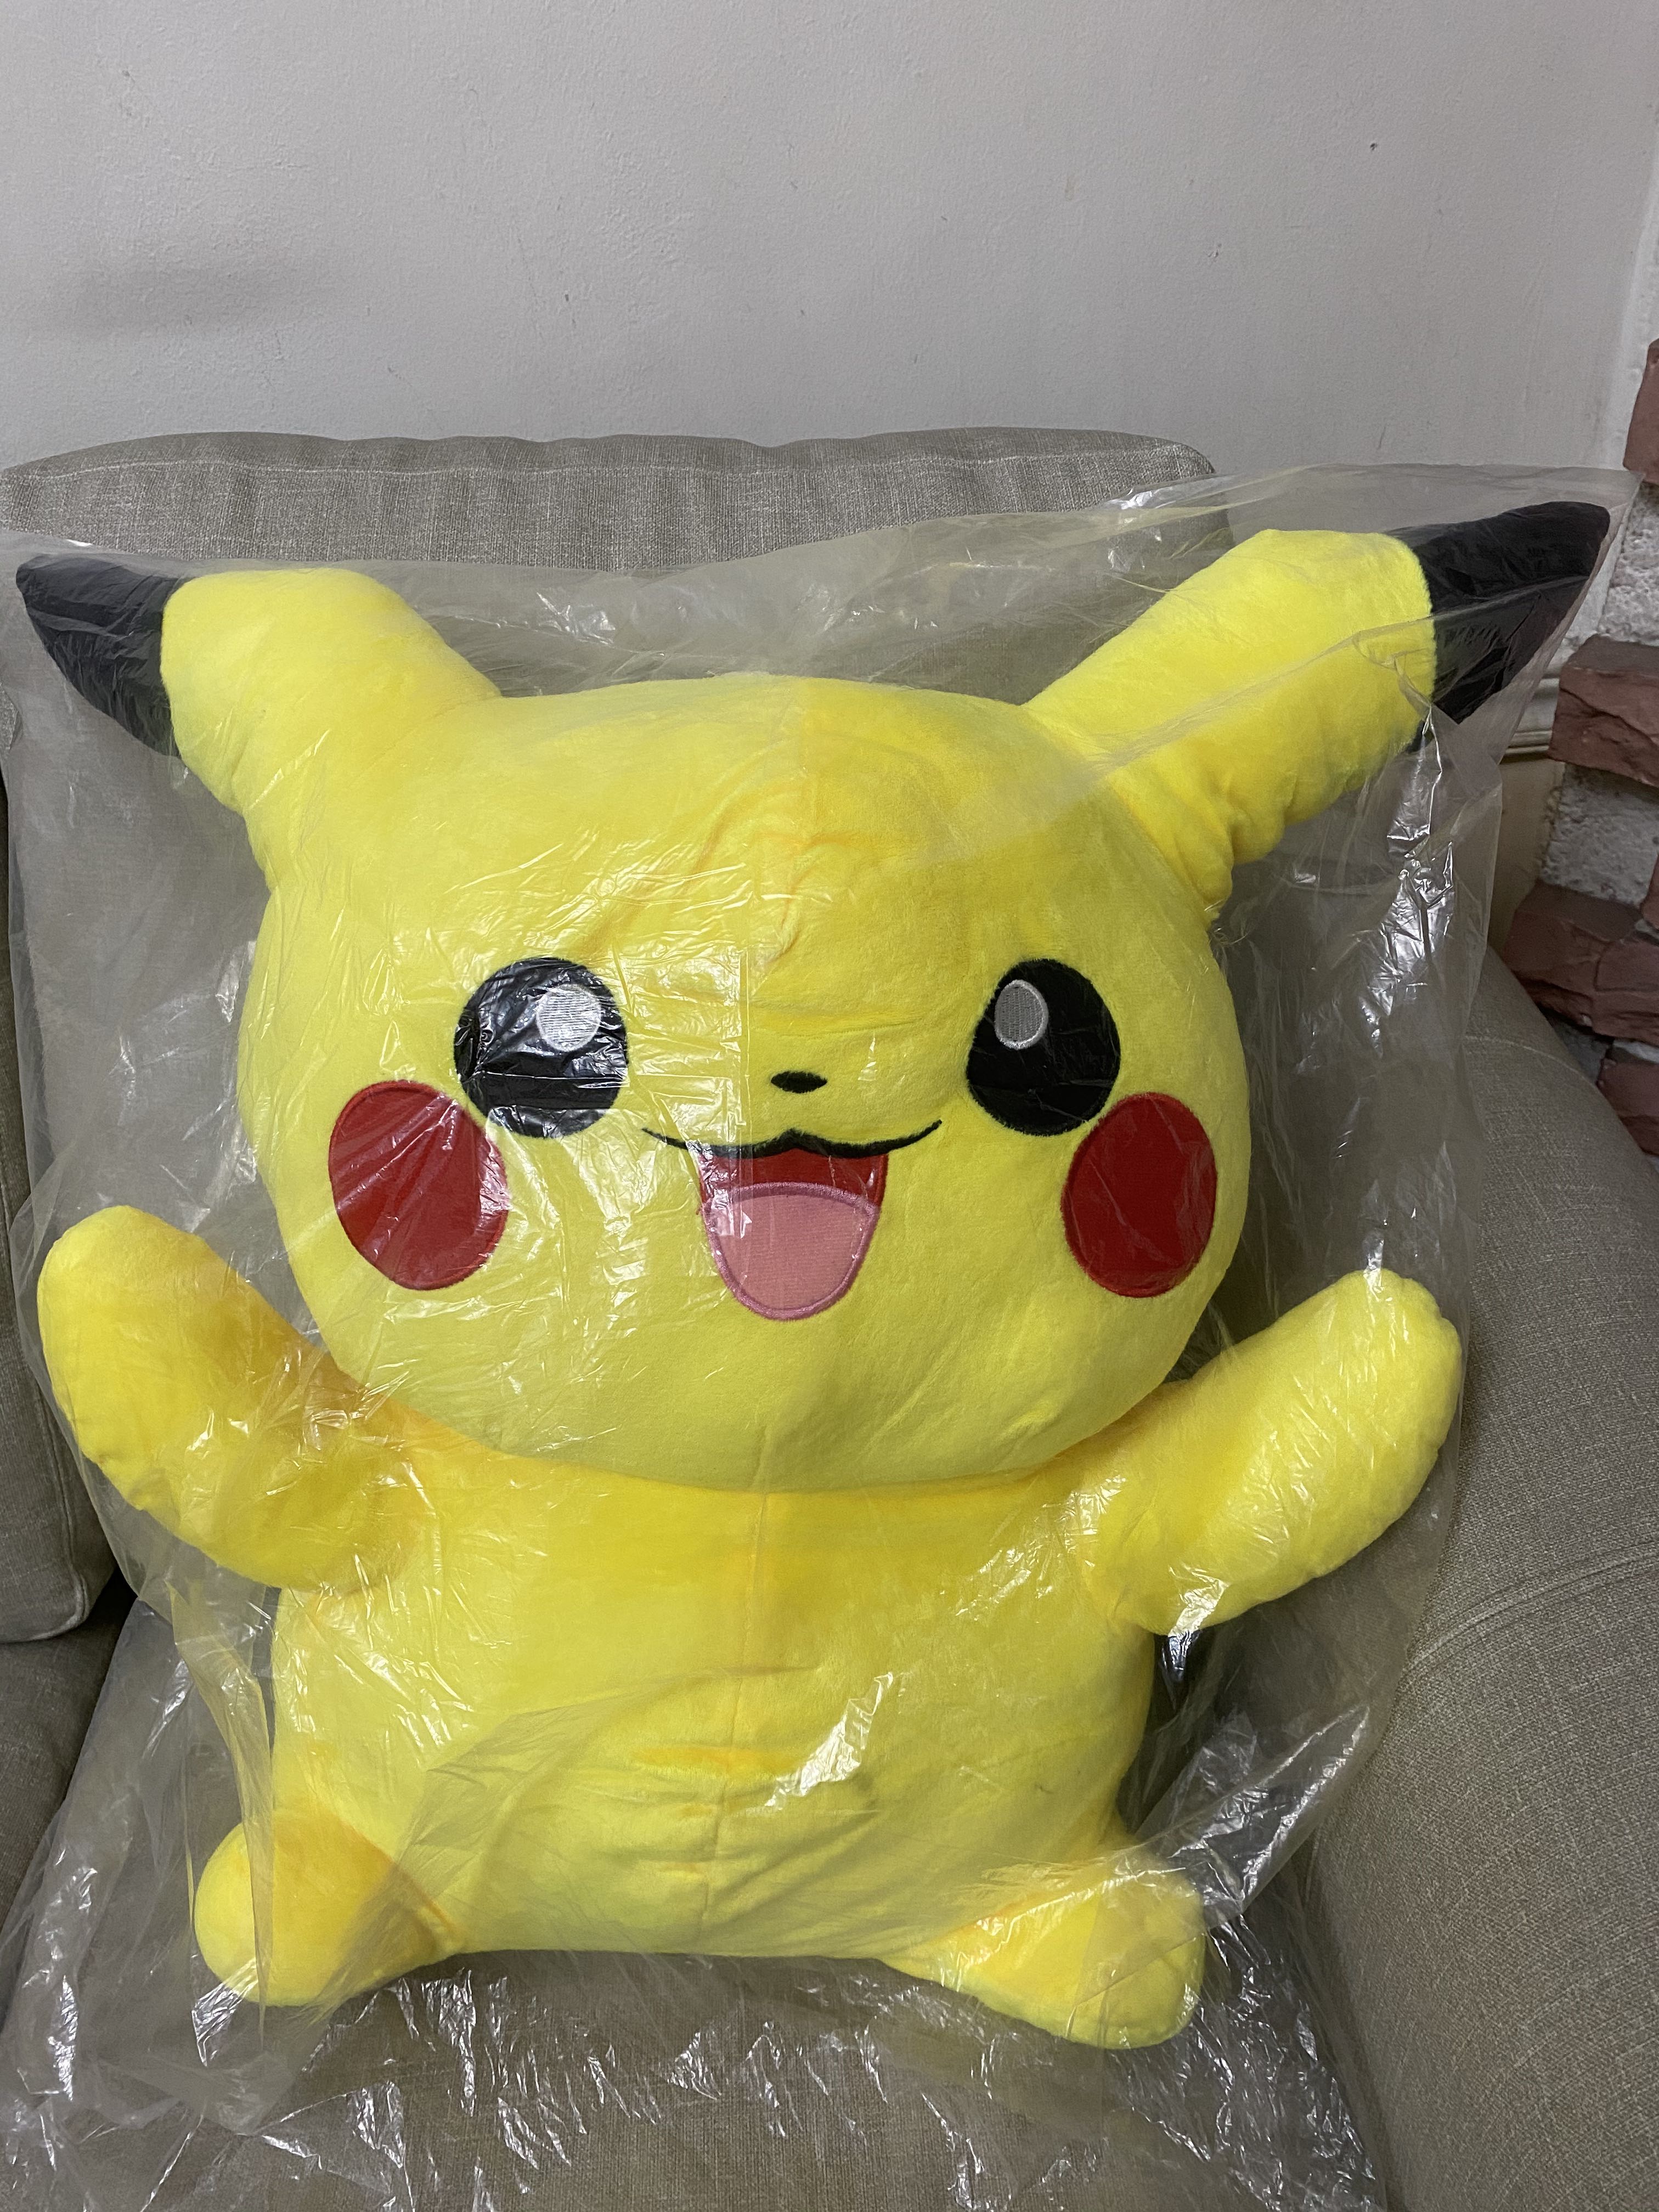 pikachu stuffed toy